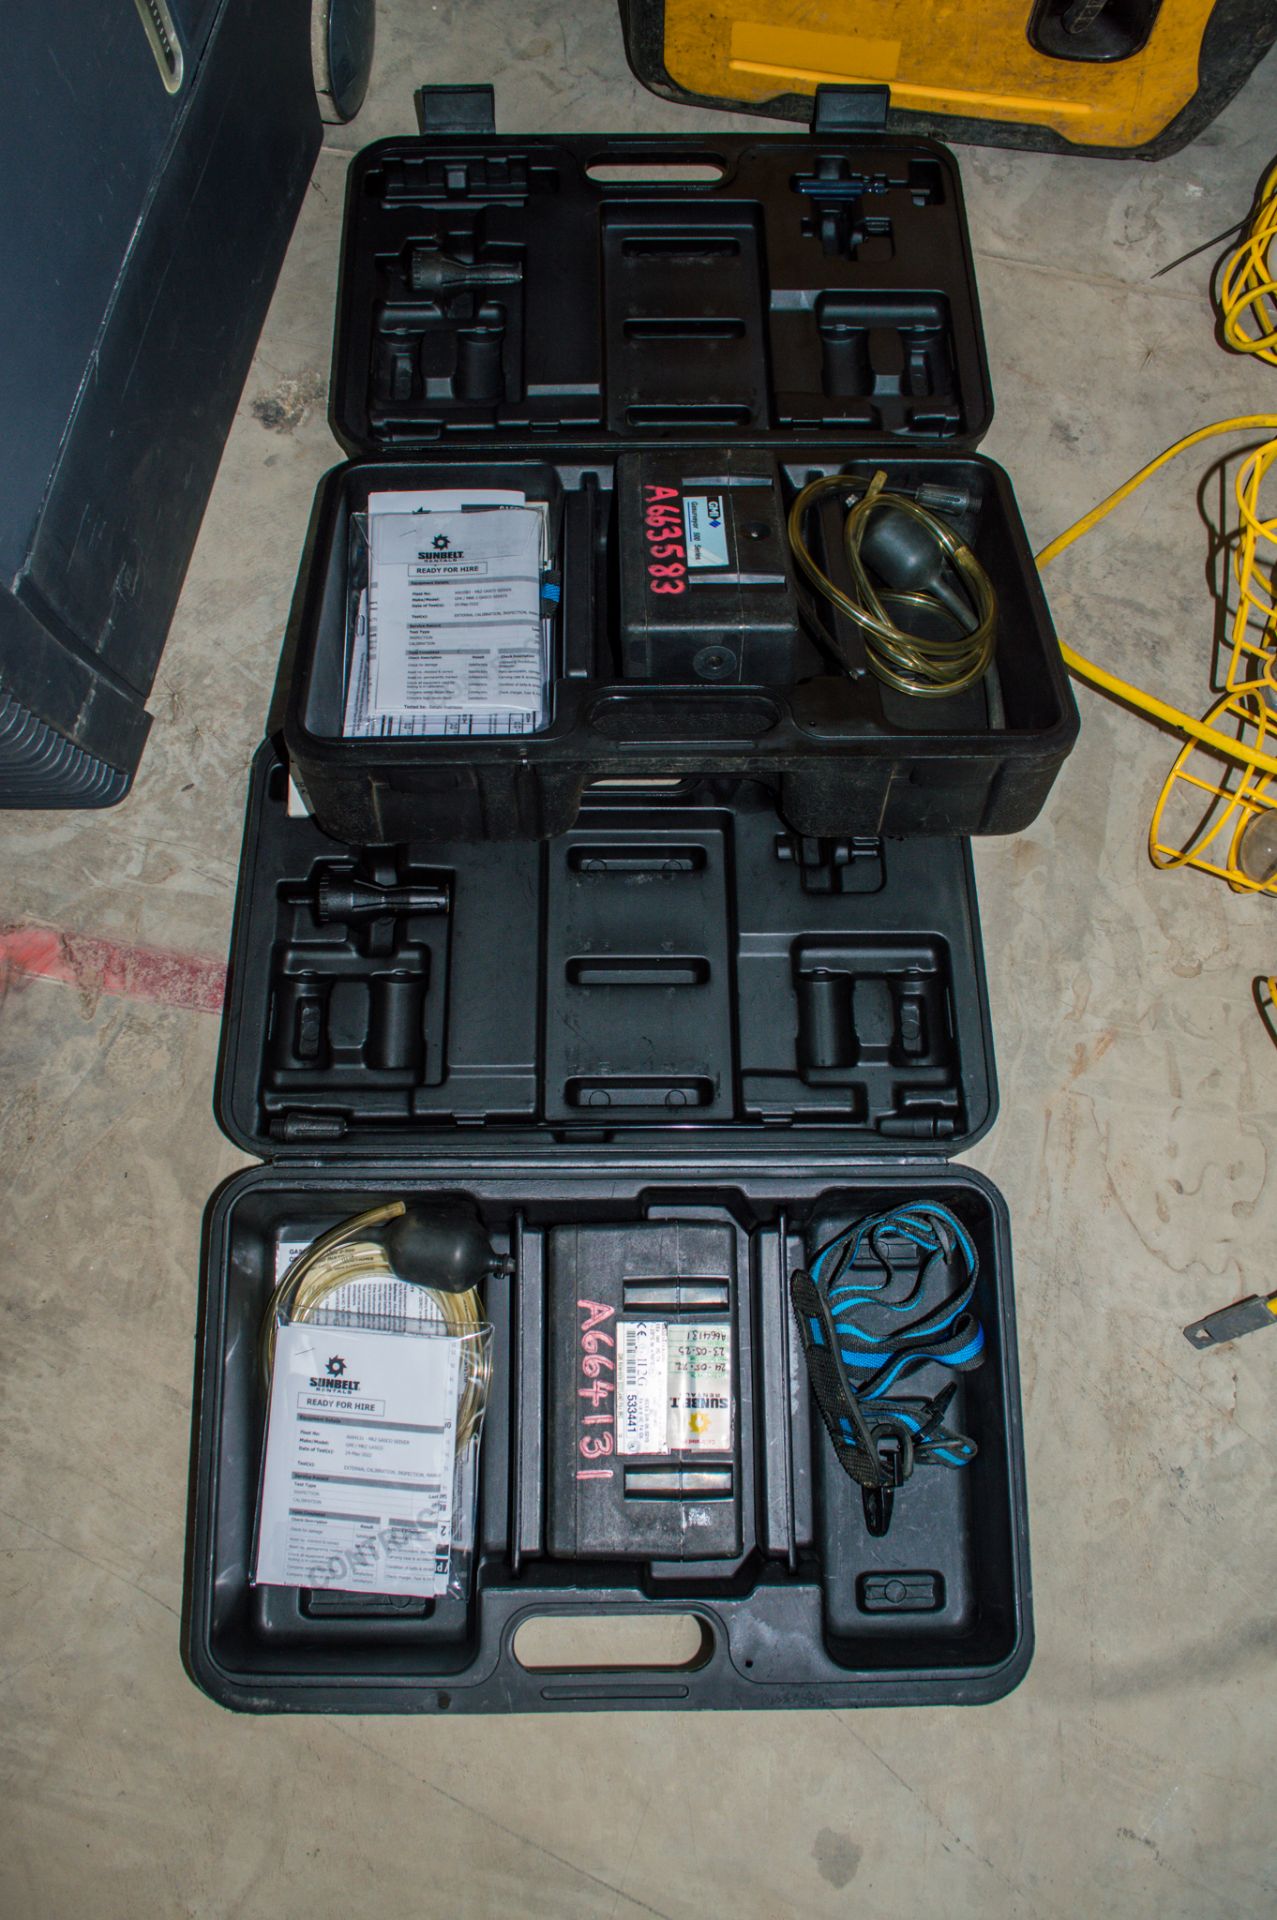 2 - GMI Gasco gas detection kits each c/w carry case A664131, A663583